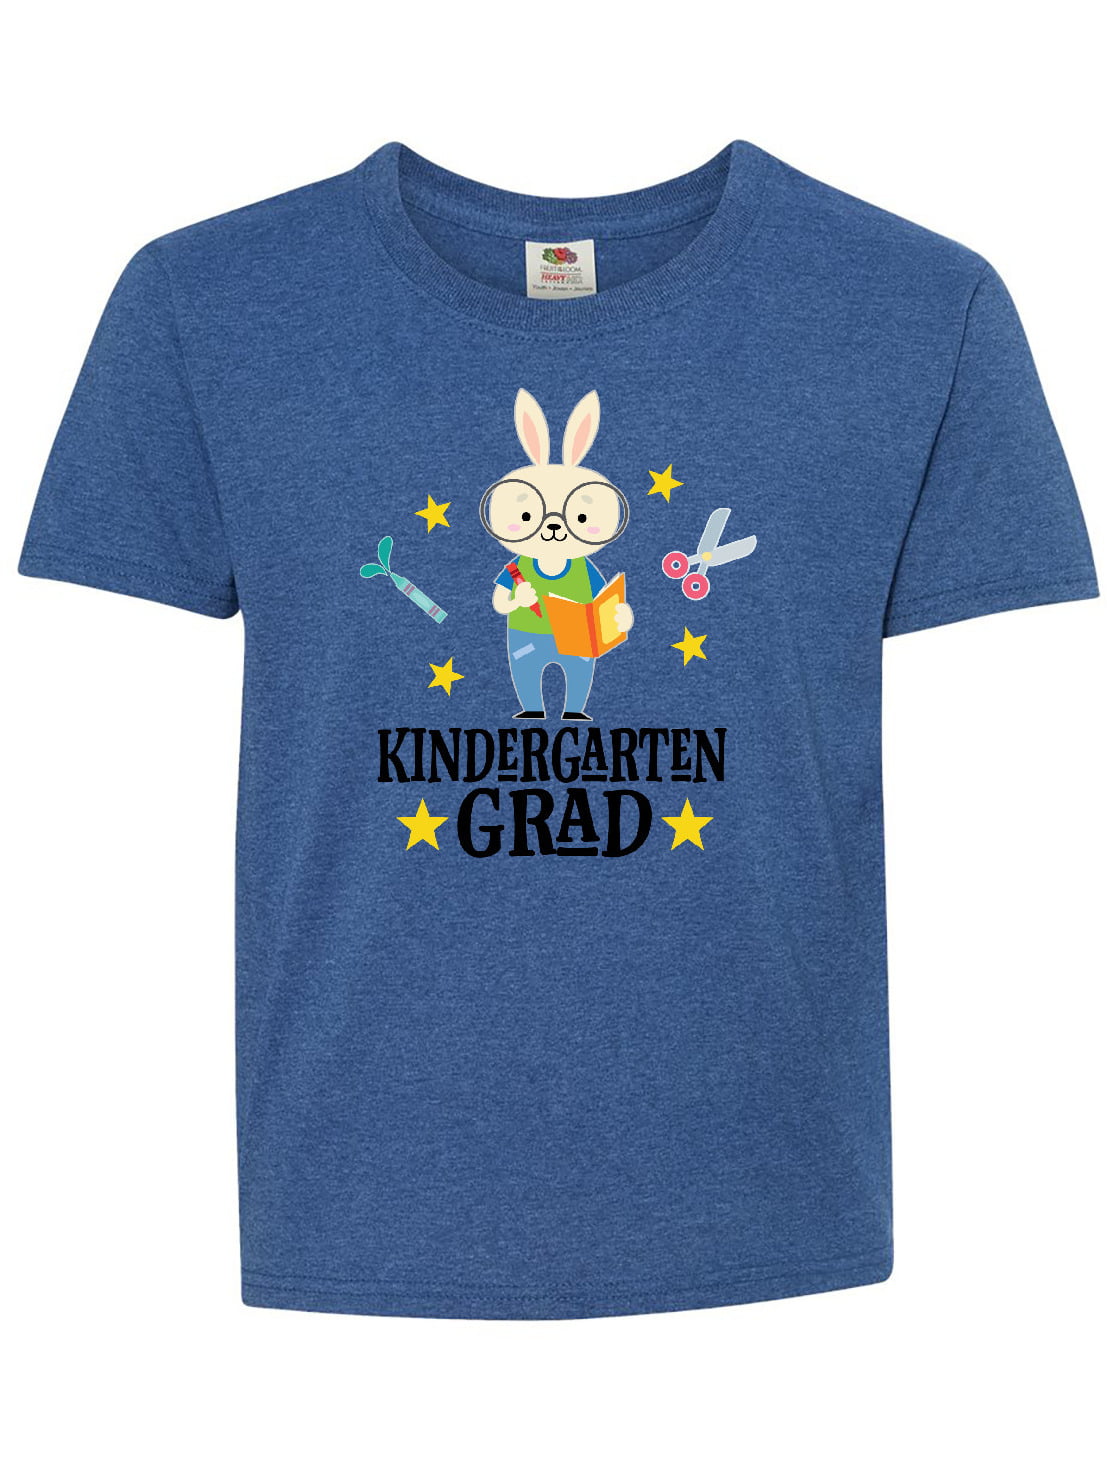 graduation outfit for kindergarten boy